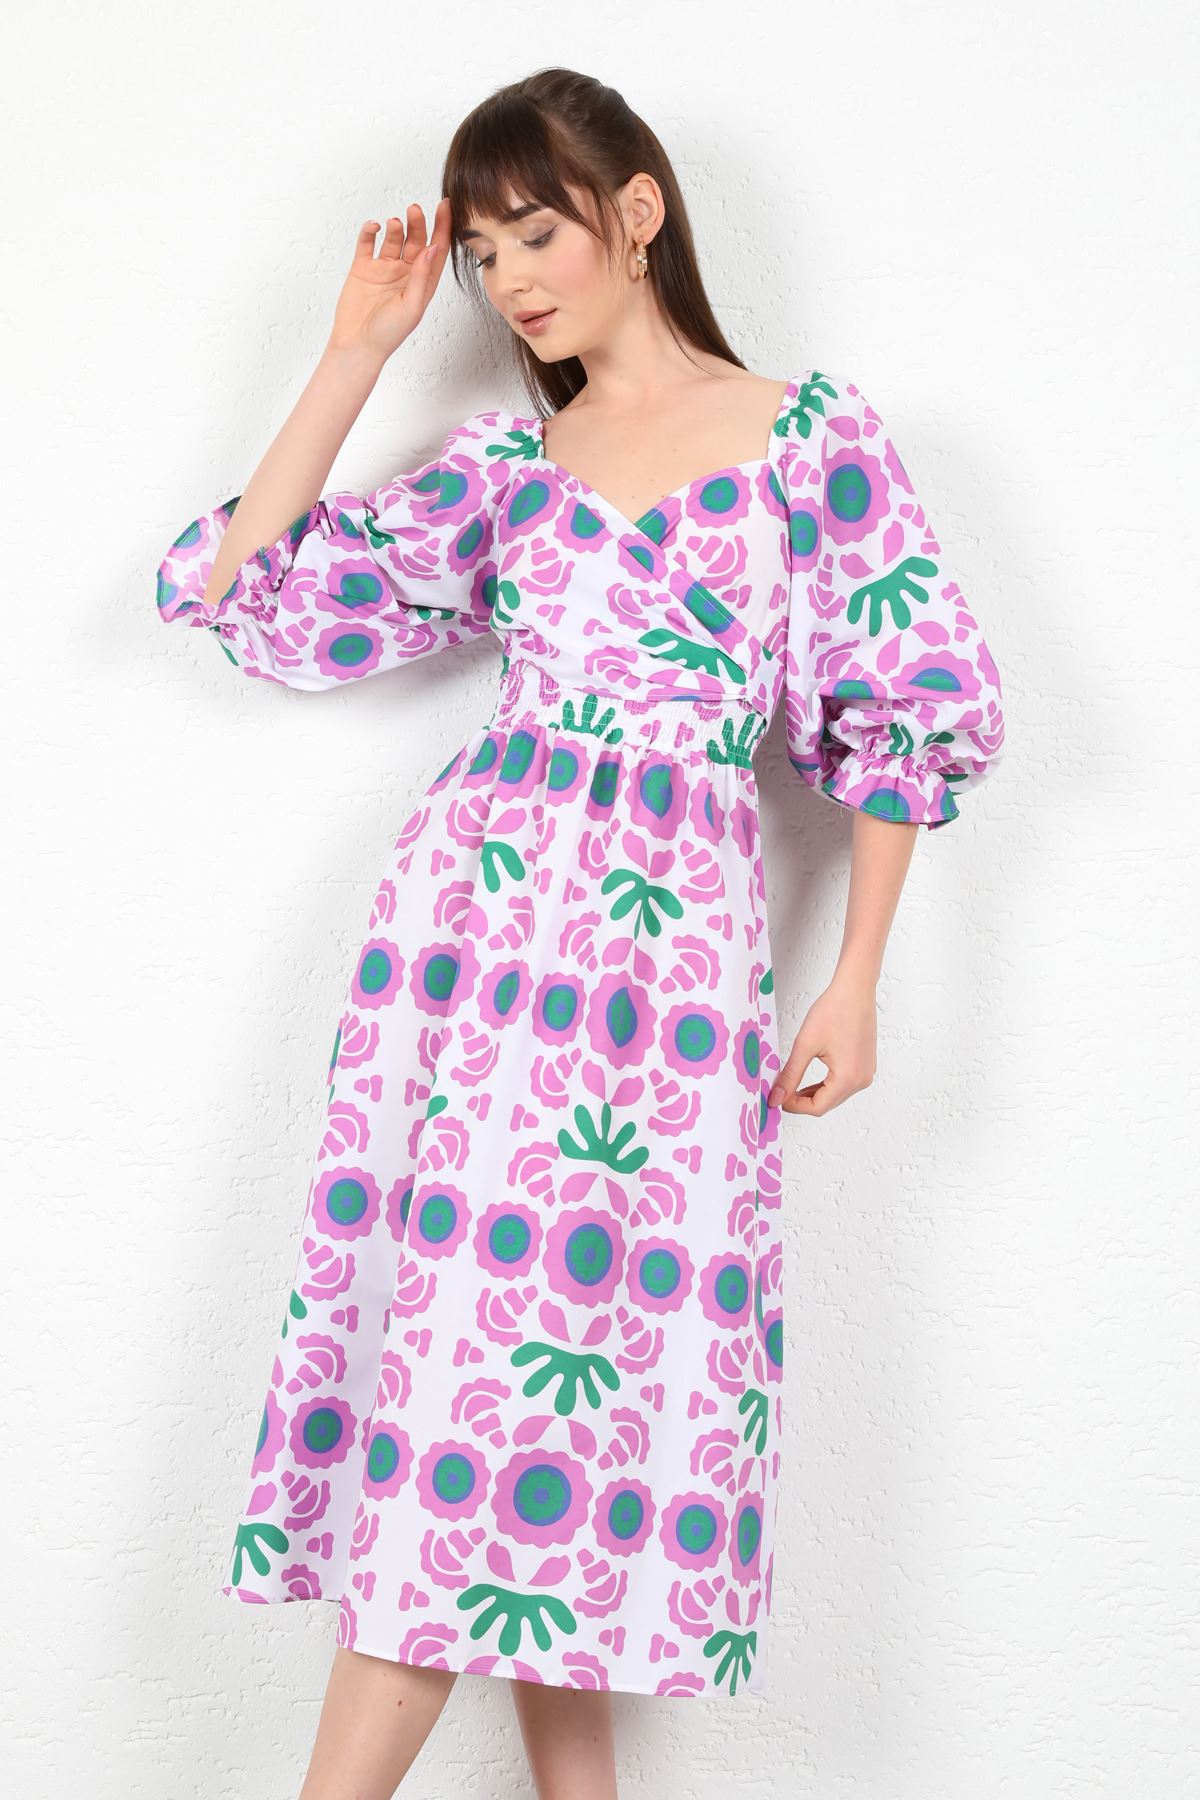 Terikoton Fabric Flower Pattern Back Detail Midi Women Dress-Lilac